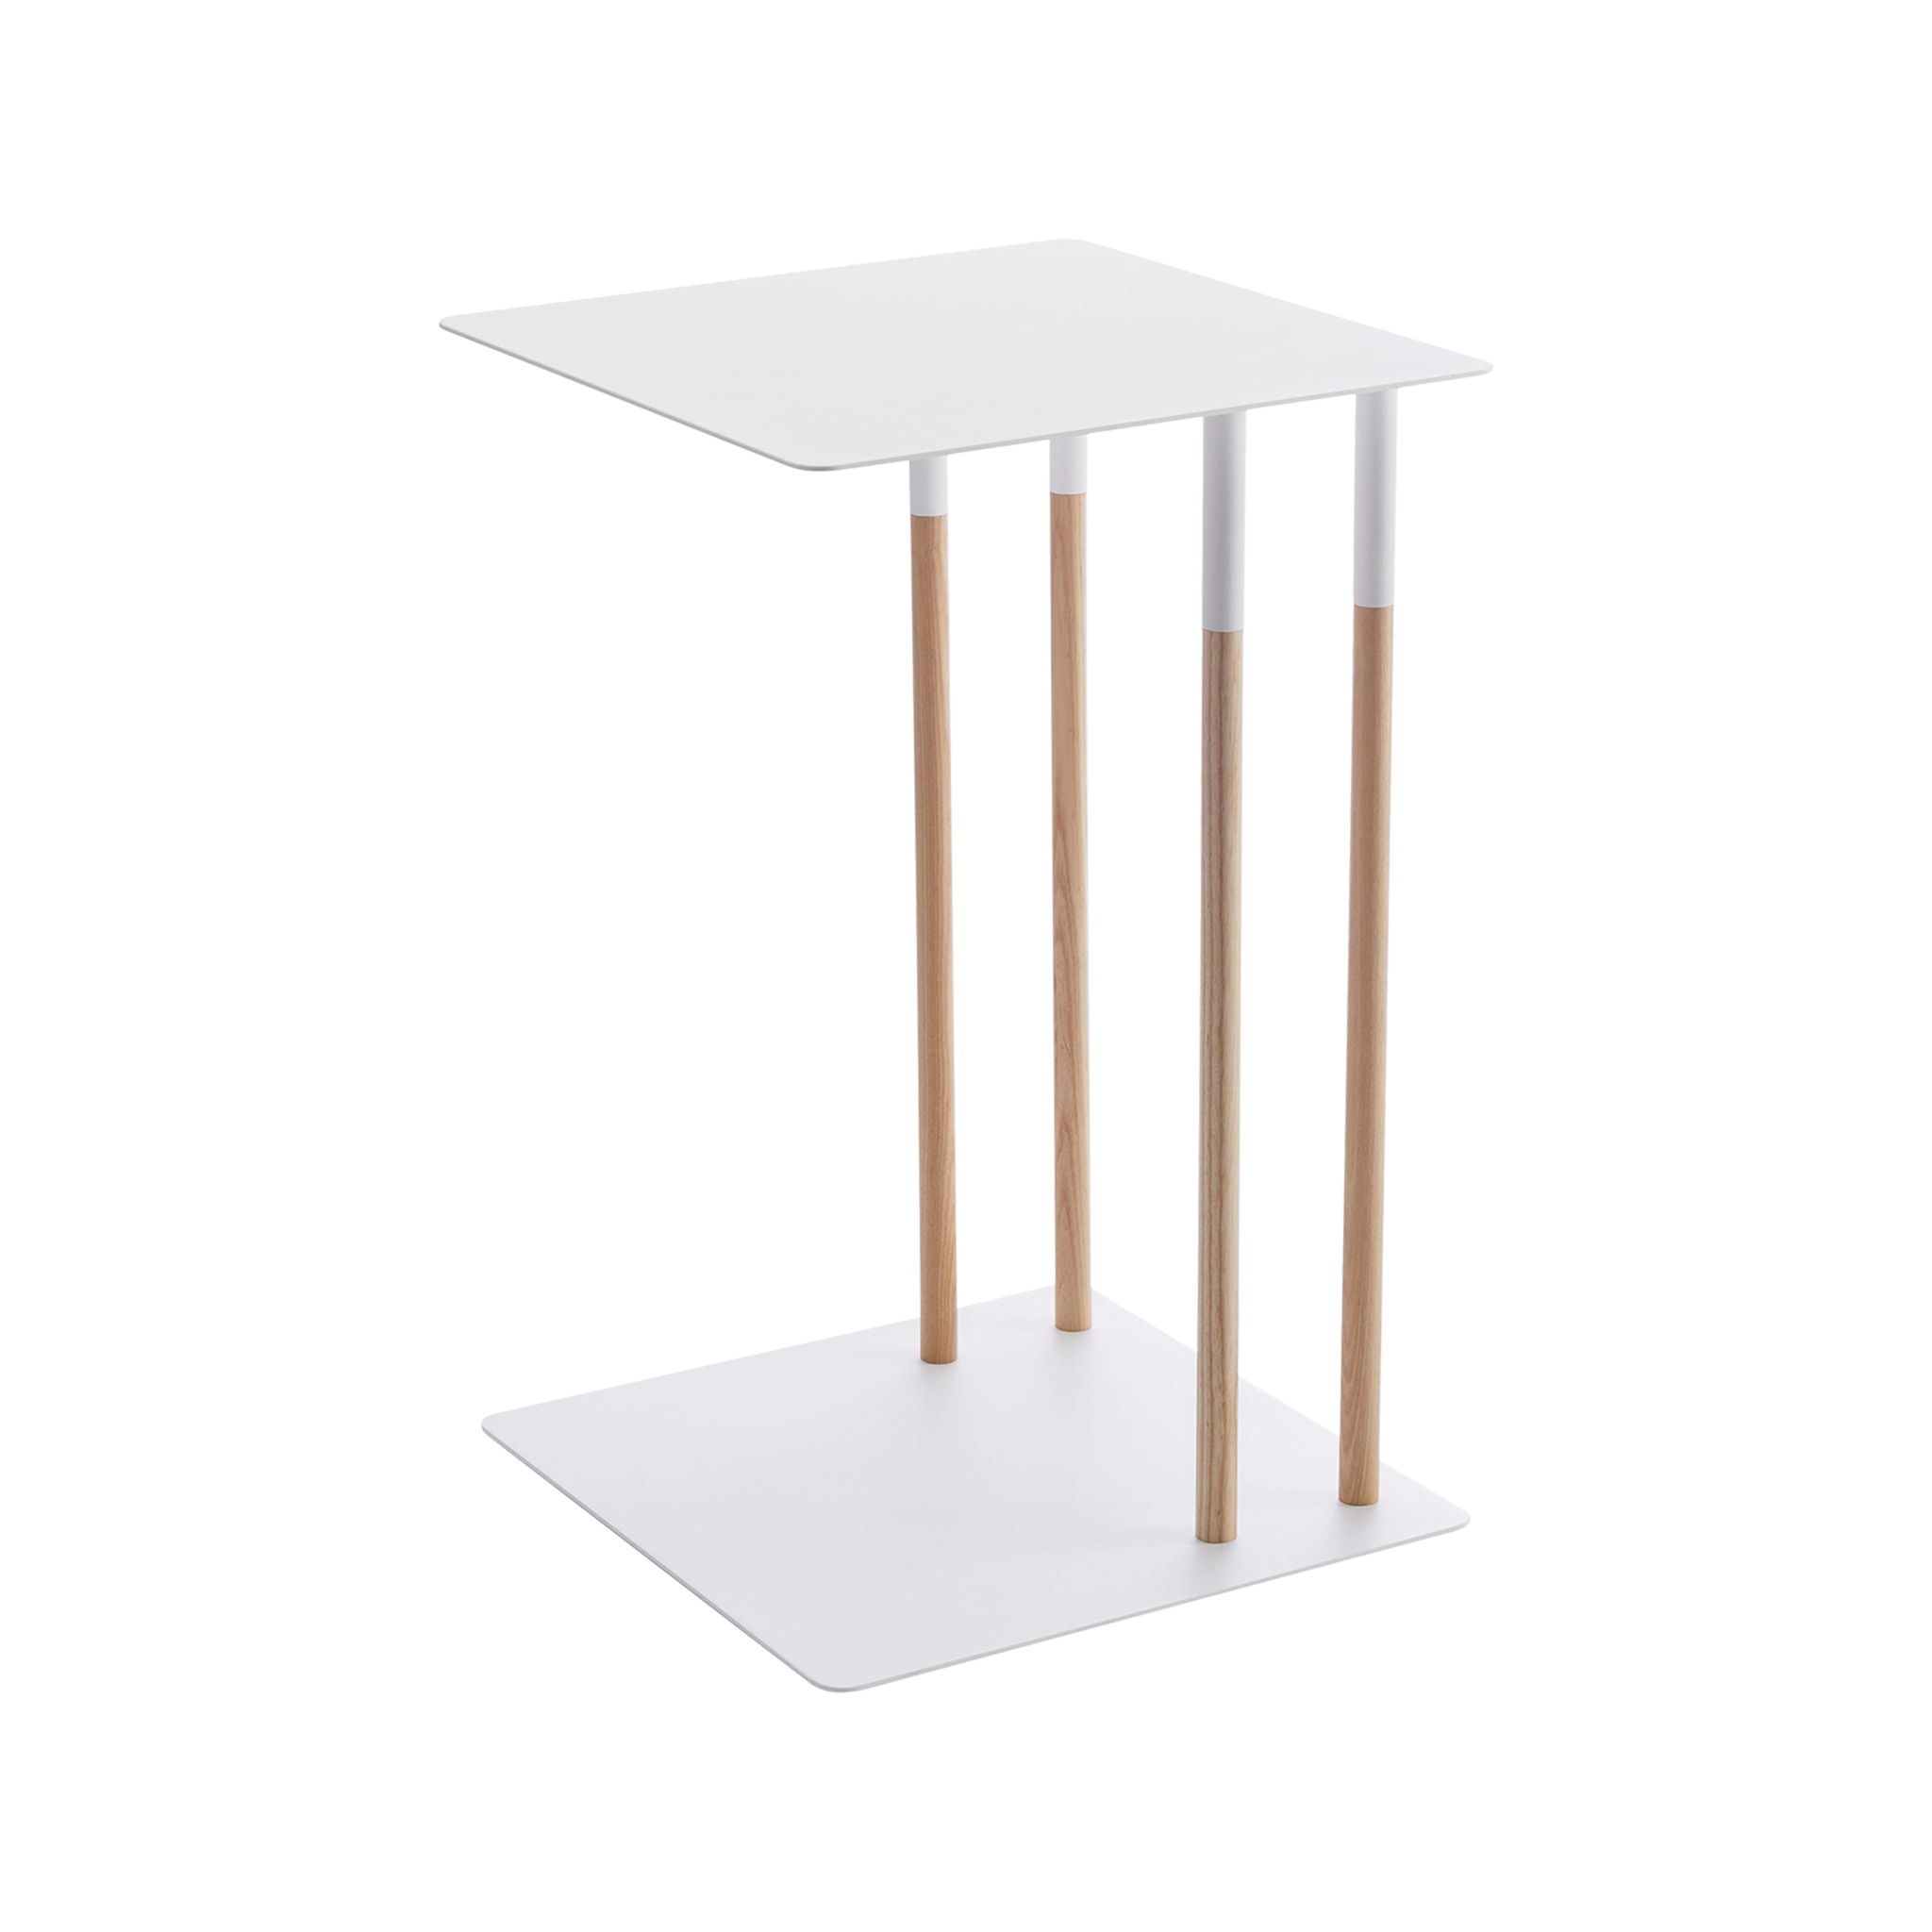 C Side Table - Steel